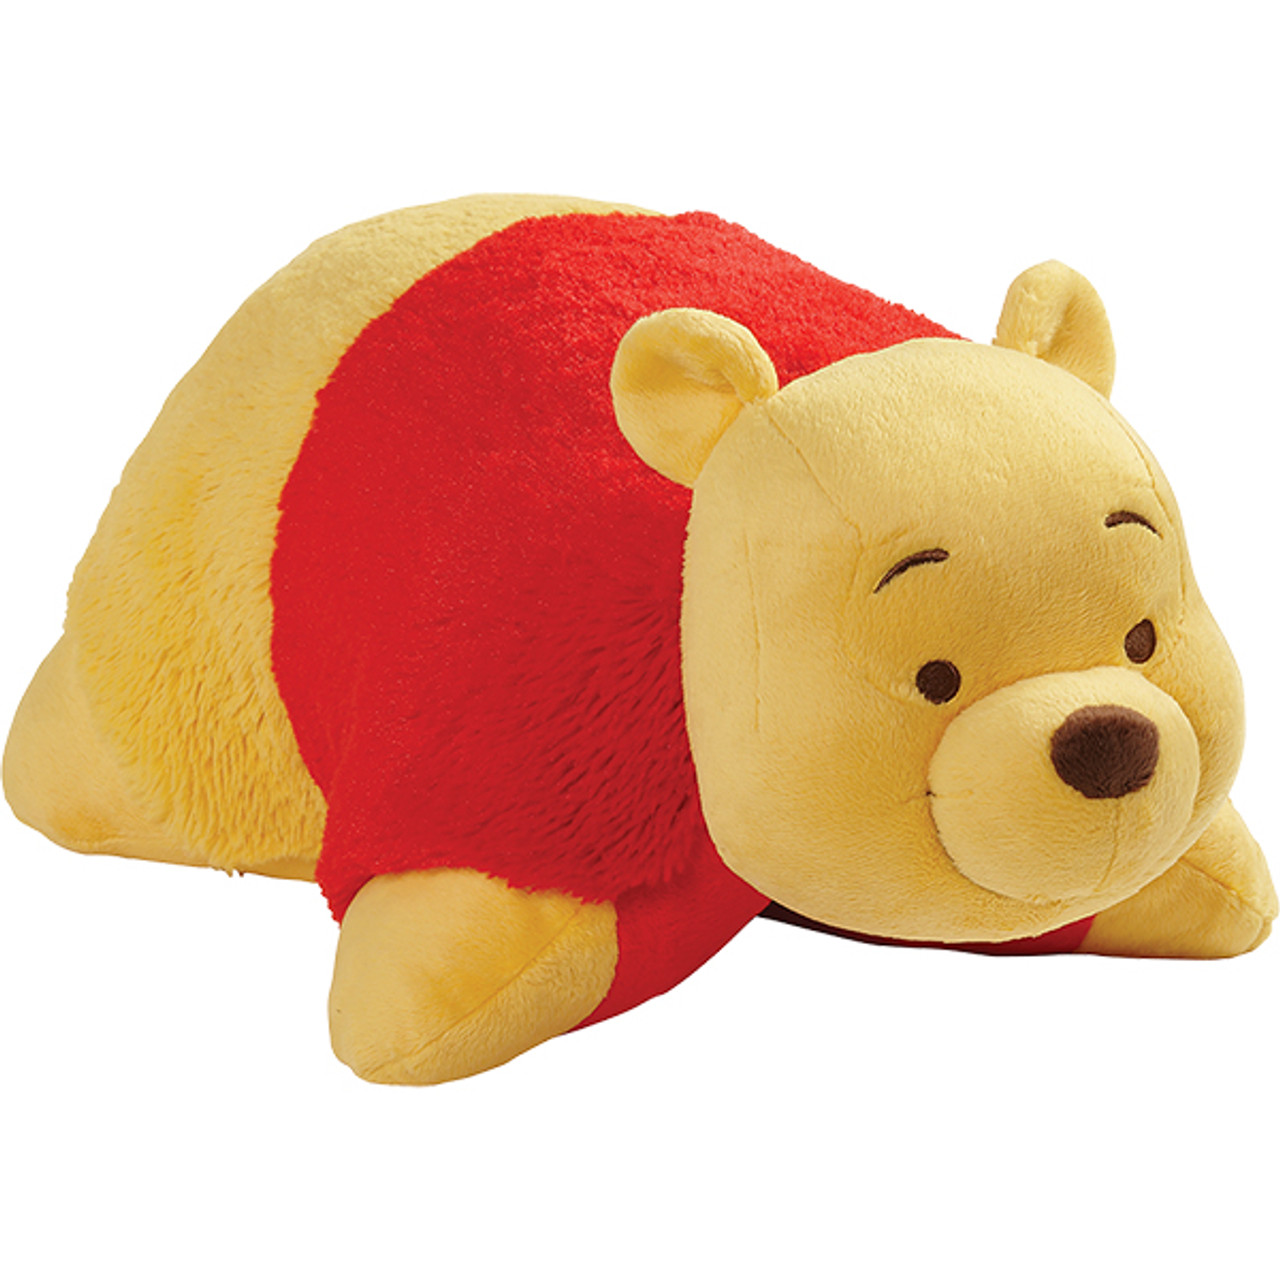 Winnie the Pooh Pillow Pet – 16 inch Large Plush Stuffed Animal Pillow